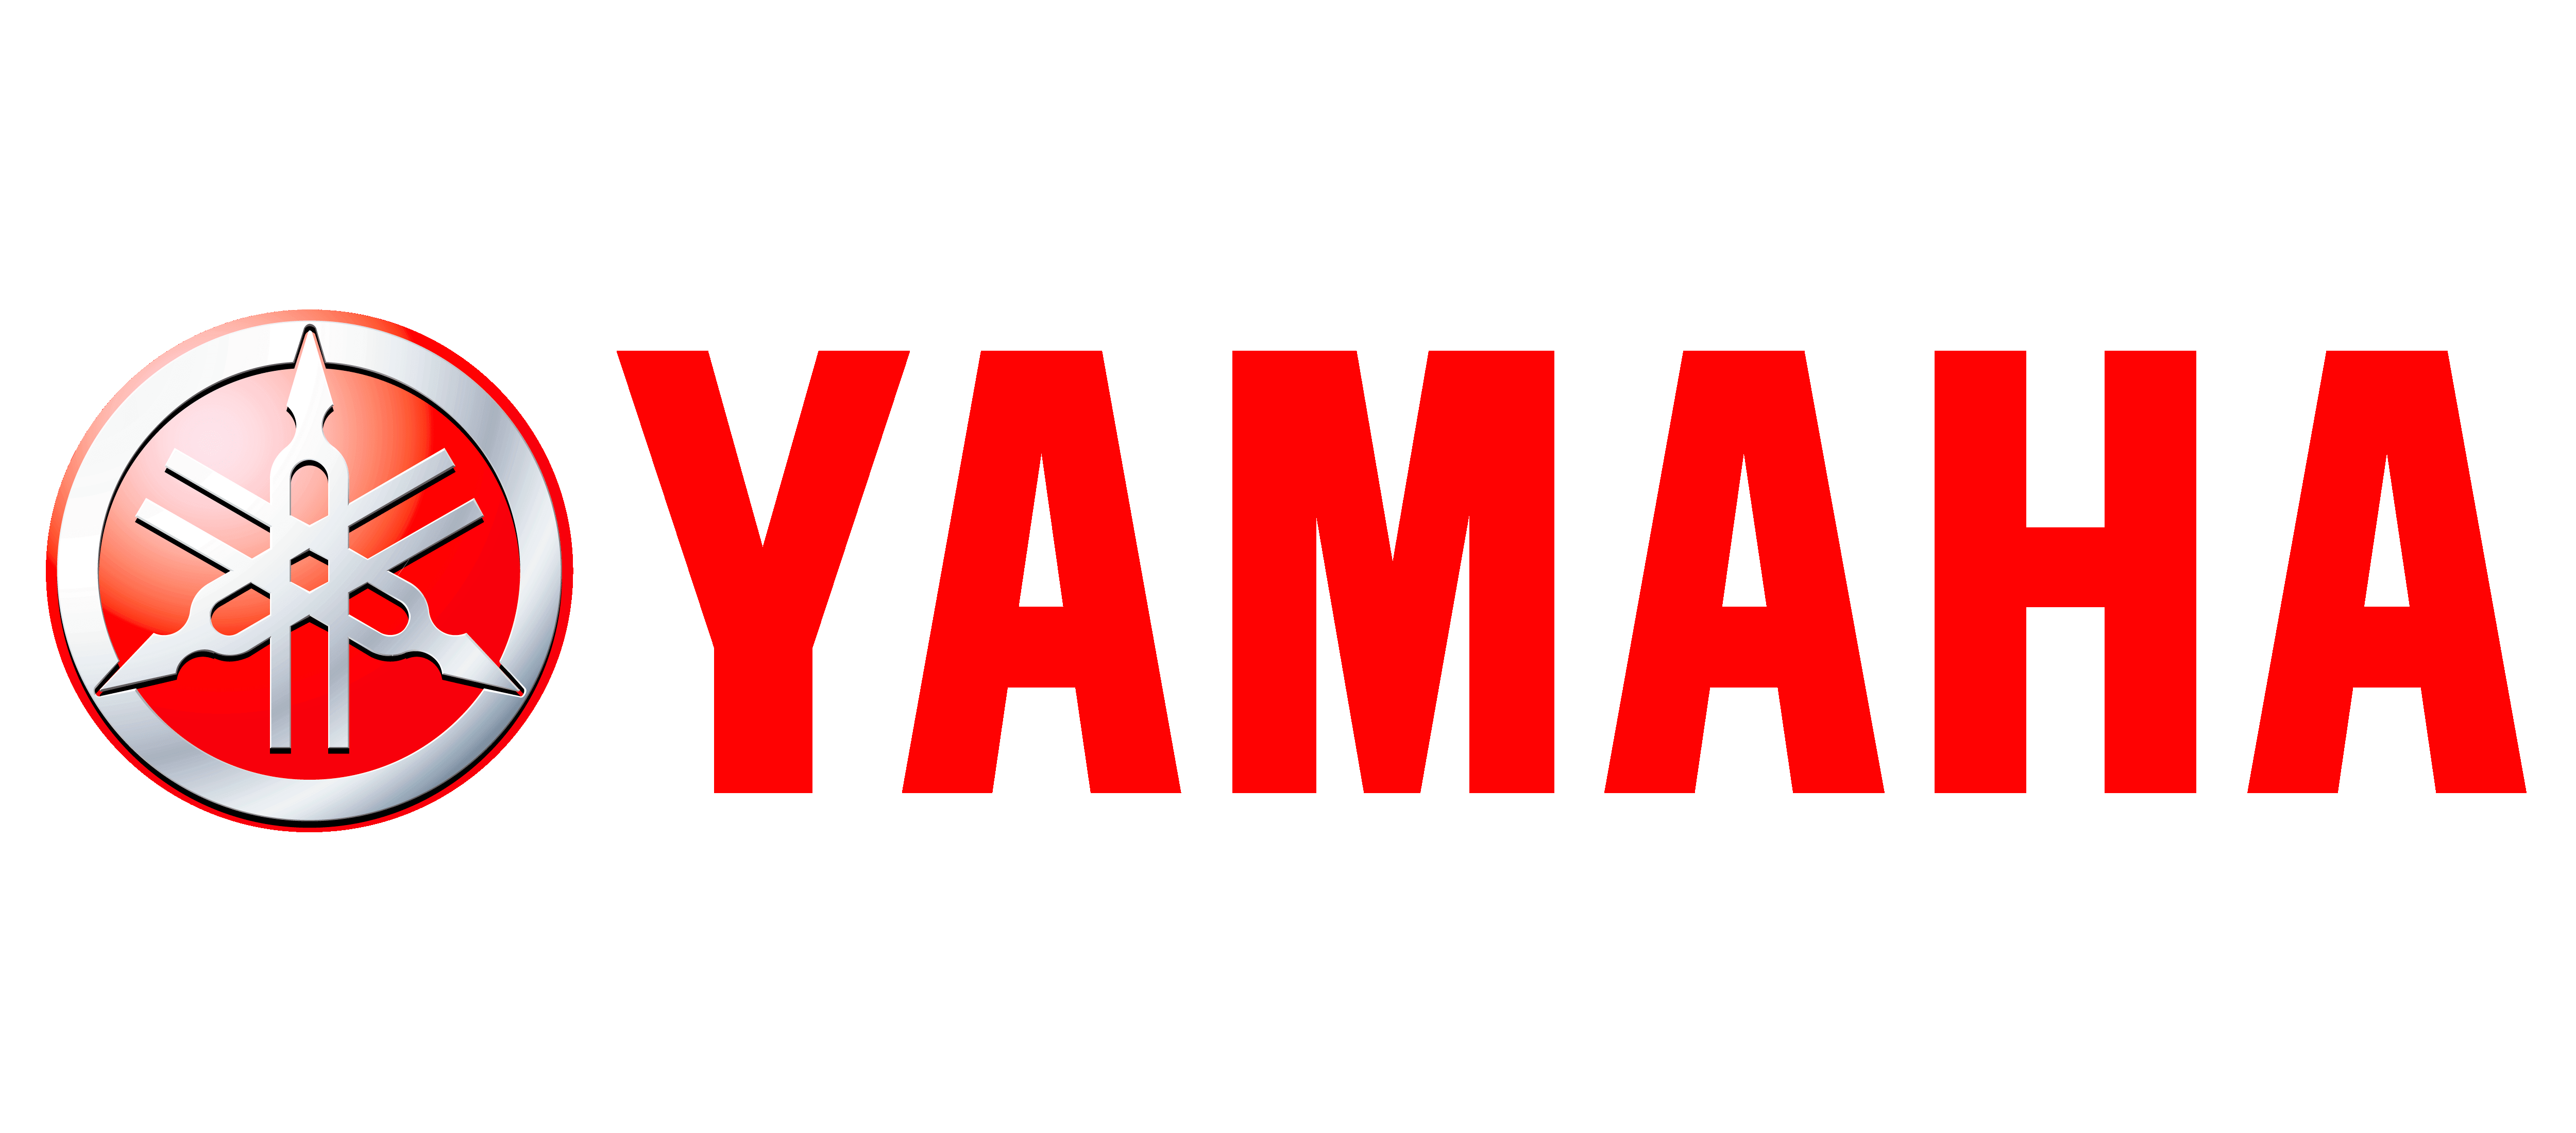 Motorcycle Company Logo - Yamaha Logo | Bikes | Yamaha logo, Motorcycle logo, Yamaha